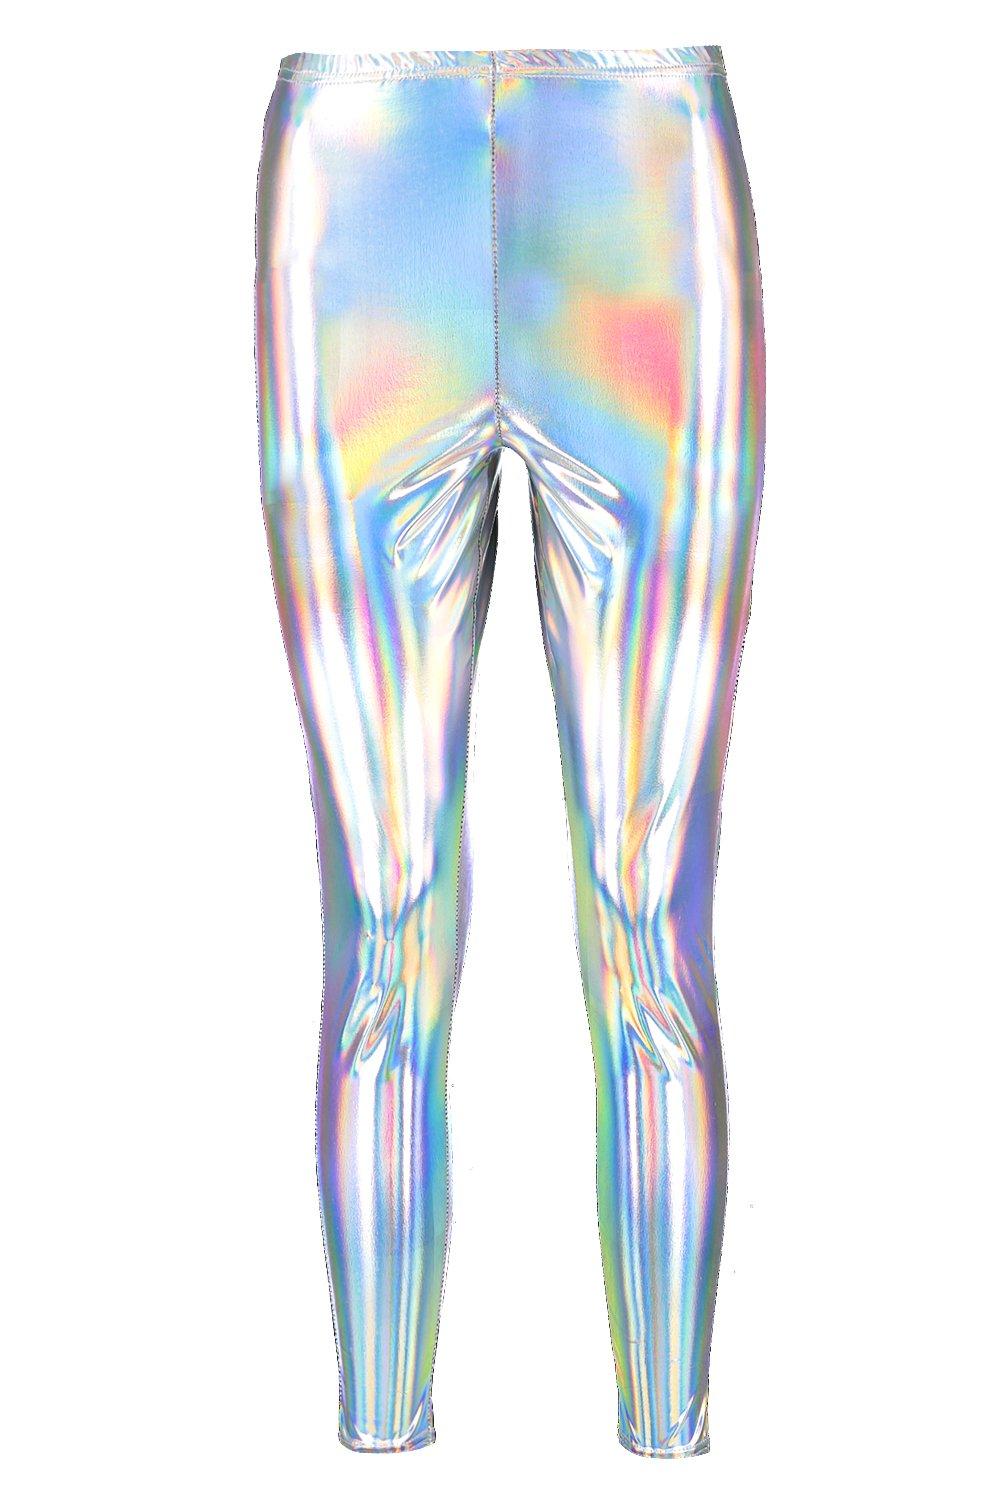 https://media.boohoo.com/i/boohoo/dzz24439_silver_xl_2/female-silver-polly-holographic-high-waist-leggings